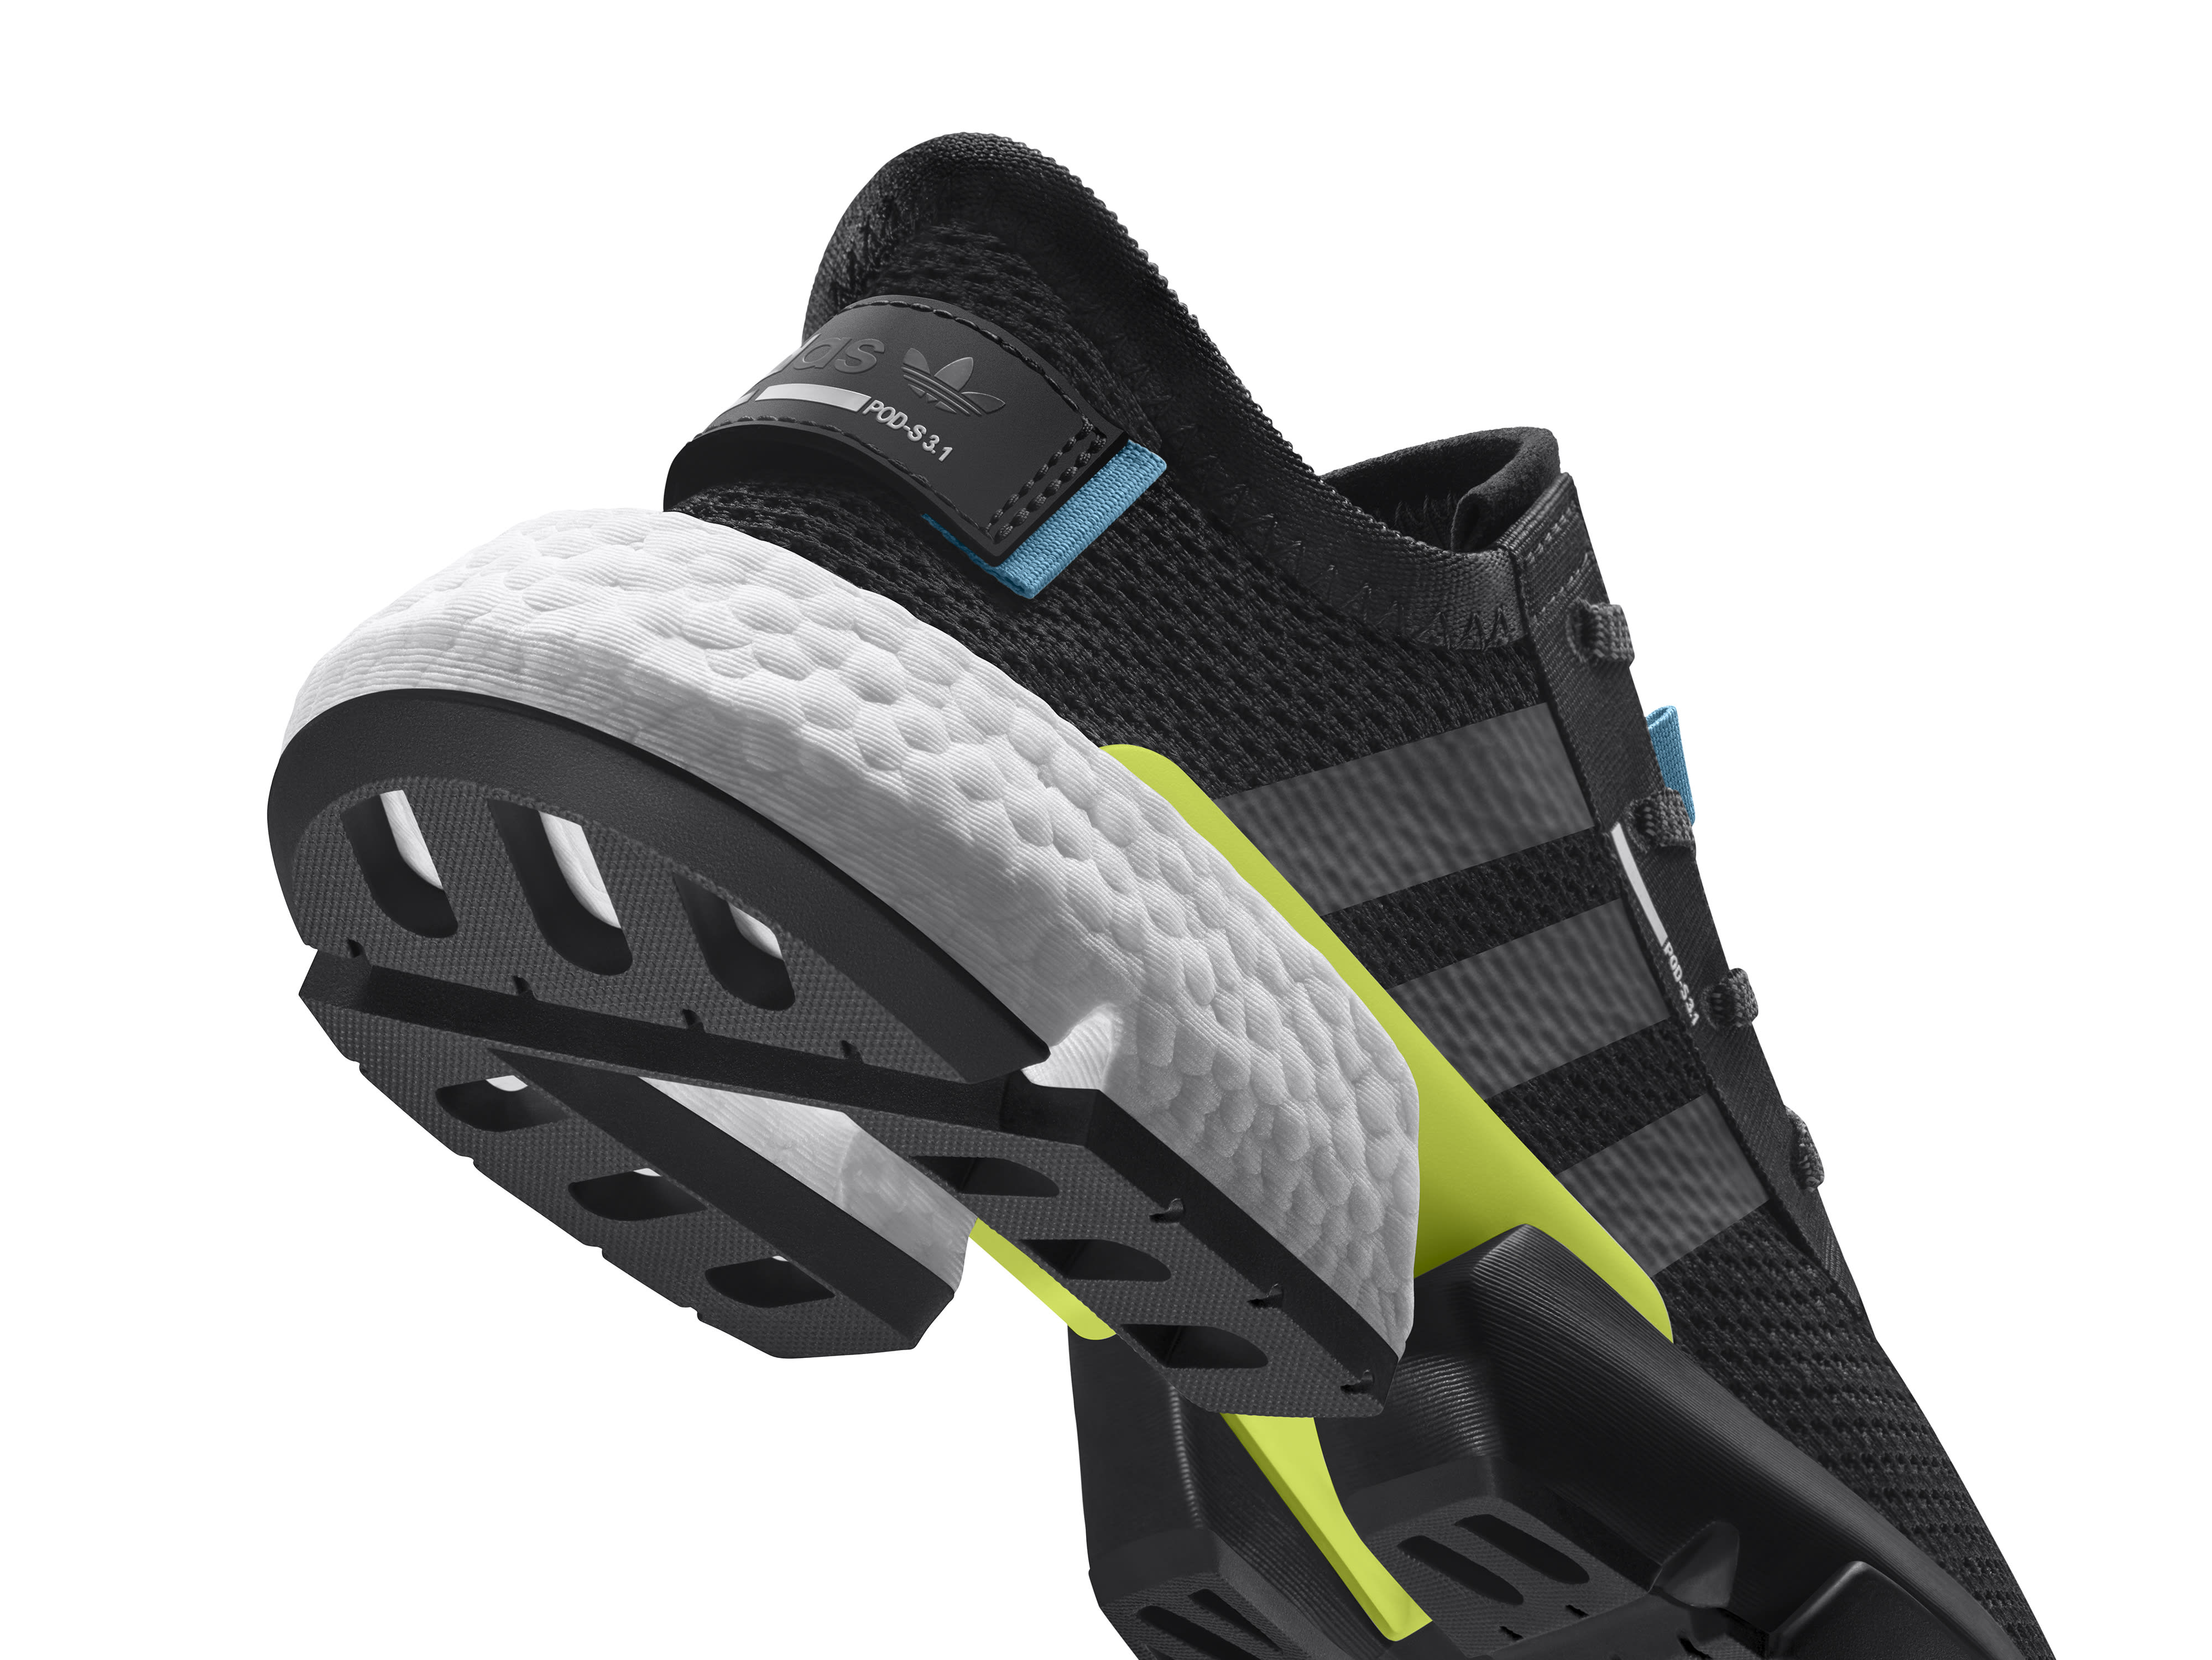 Adidas P.O.D. System AQ1059 (Heel)